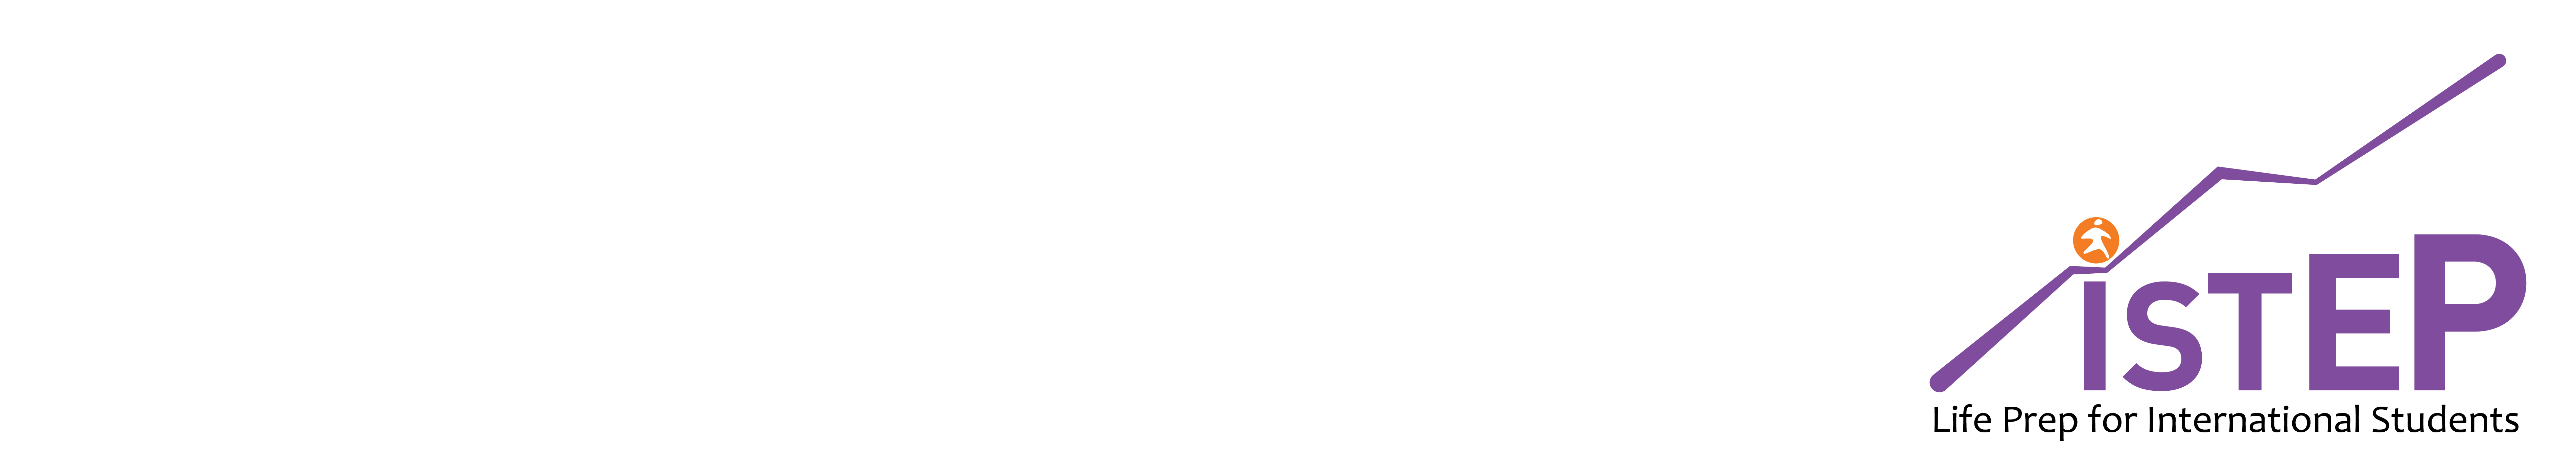 iSTEP logo